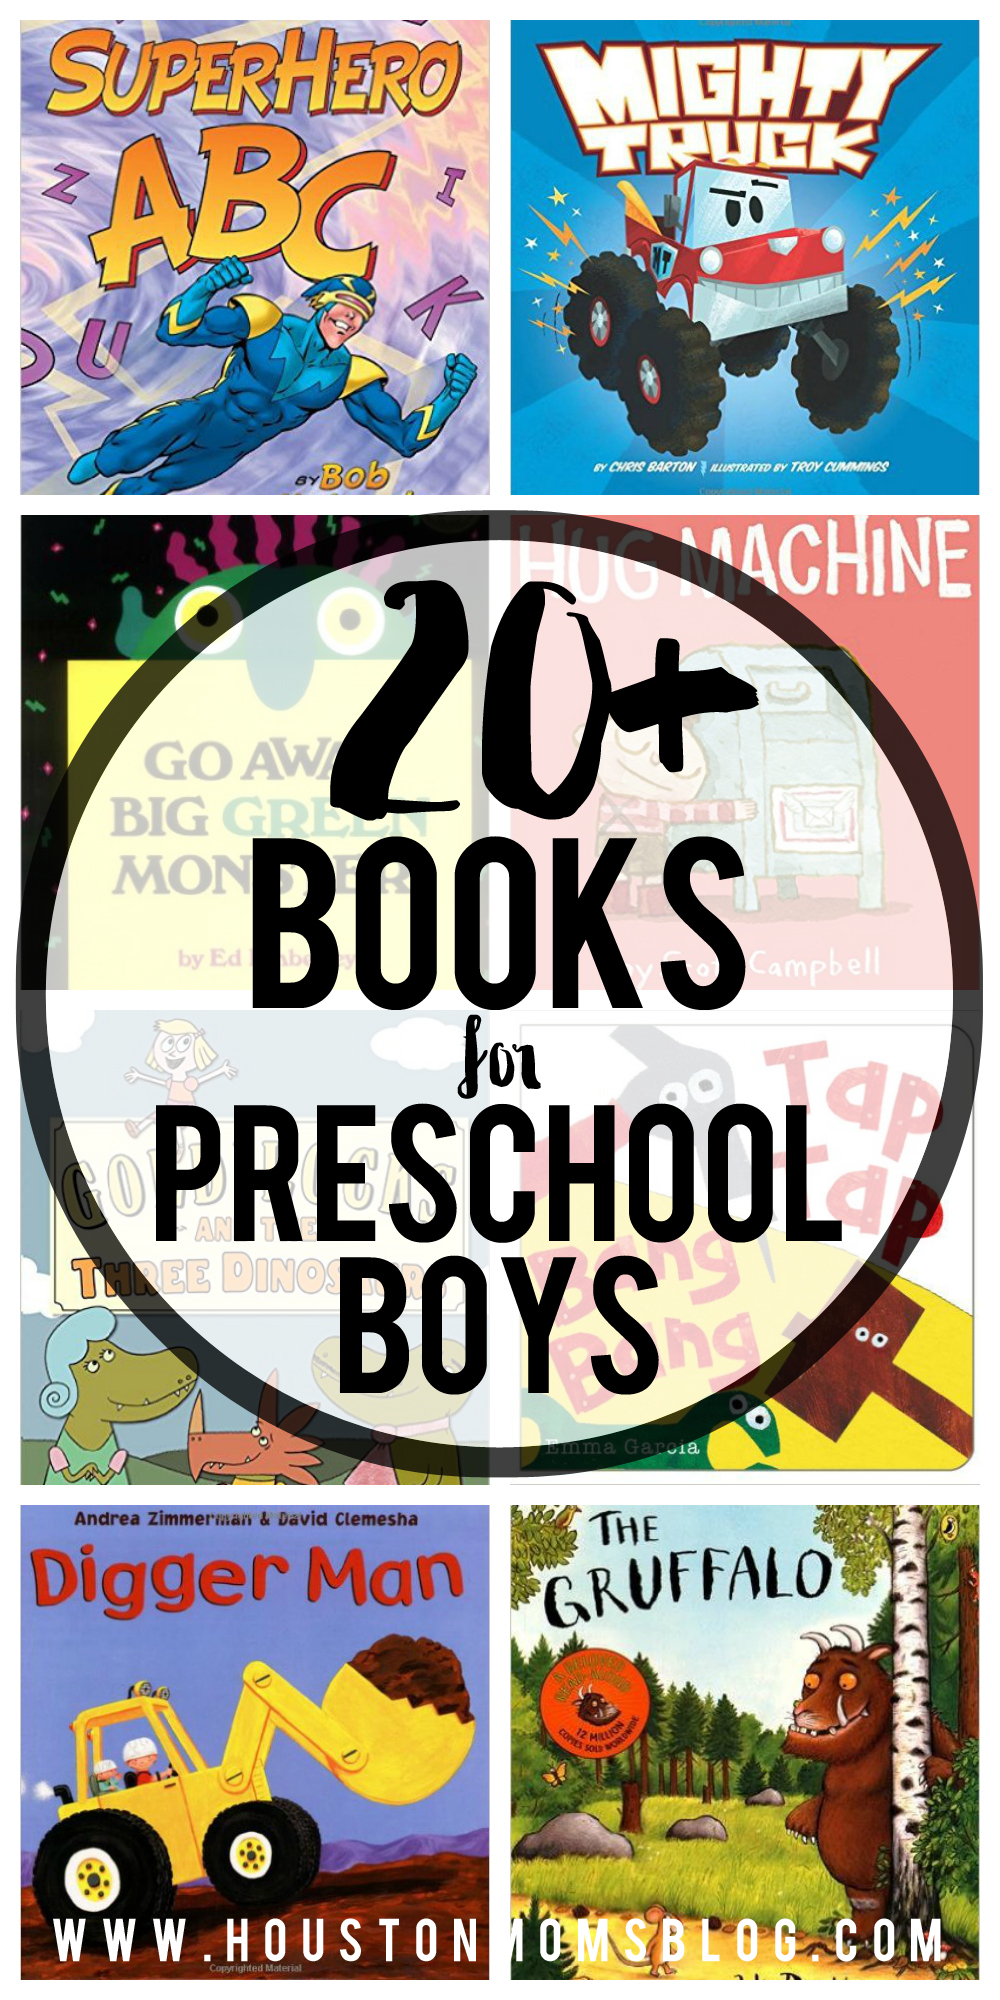 20 plus Books for Preschool Boys. A collage of 8 books. www.houstonmomsblog.com